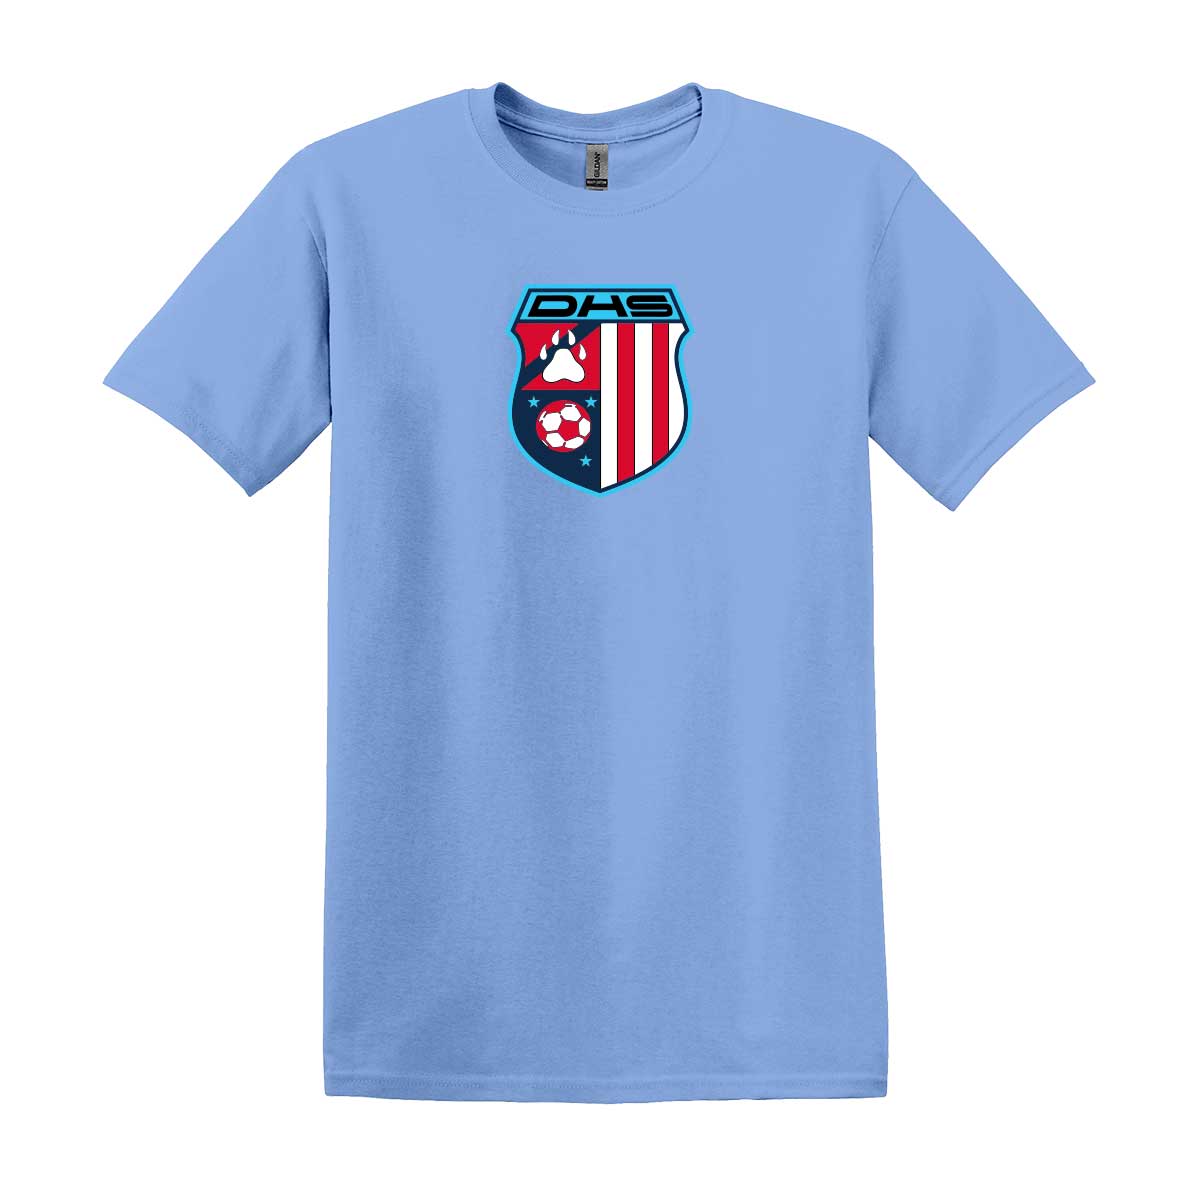 Deming Boys Soccer Cotton T-Shirt